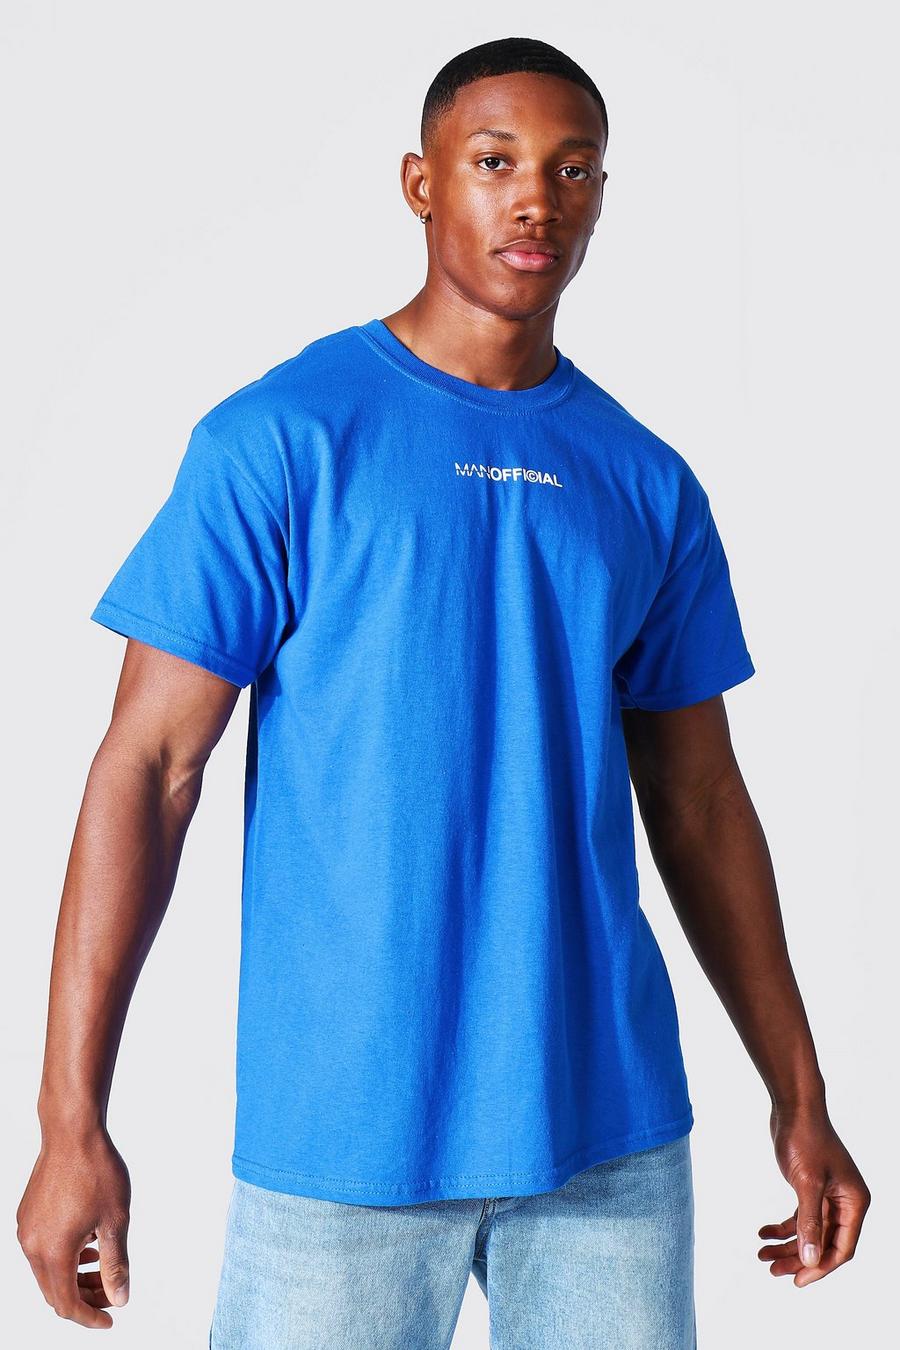 T-shirt Man Official, Blu cobalto image number 1